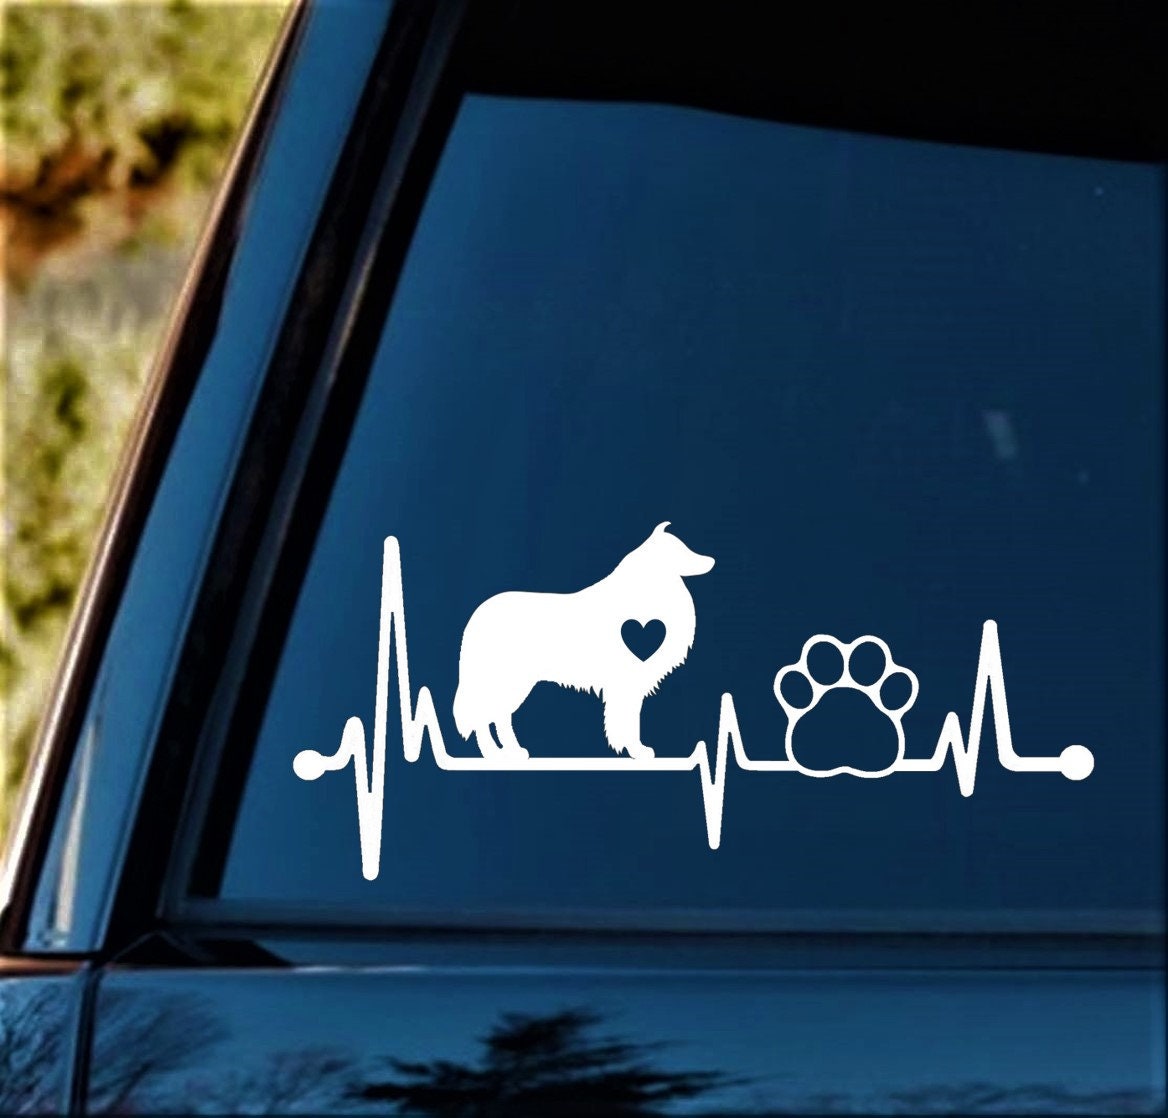 Collie Heartbeat Lifeline Dog Paw Decal Sticker for Car Window 8 Inch BG 204 Pet 